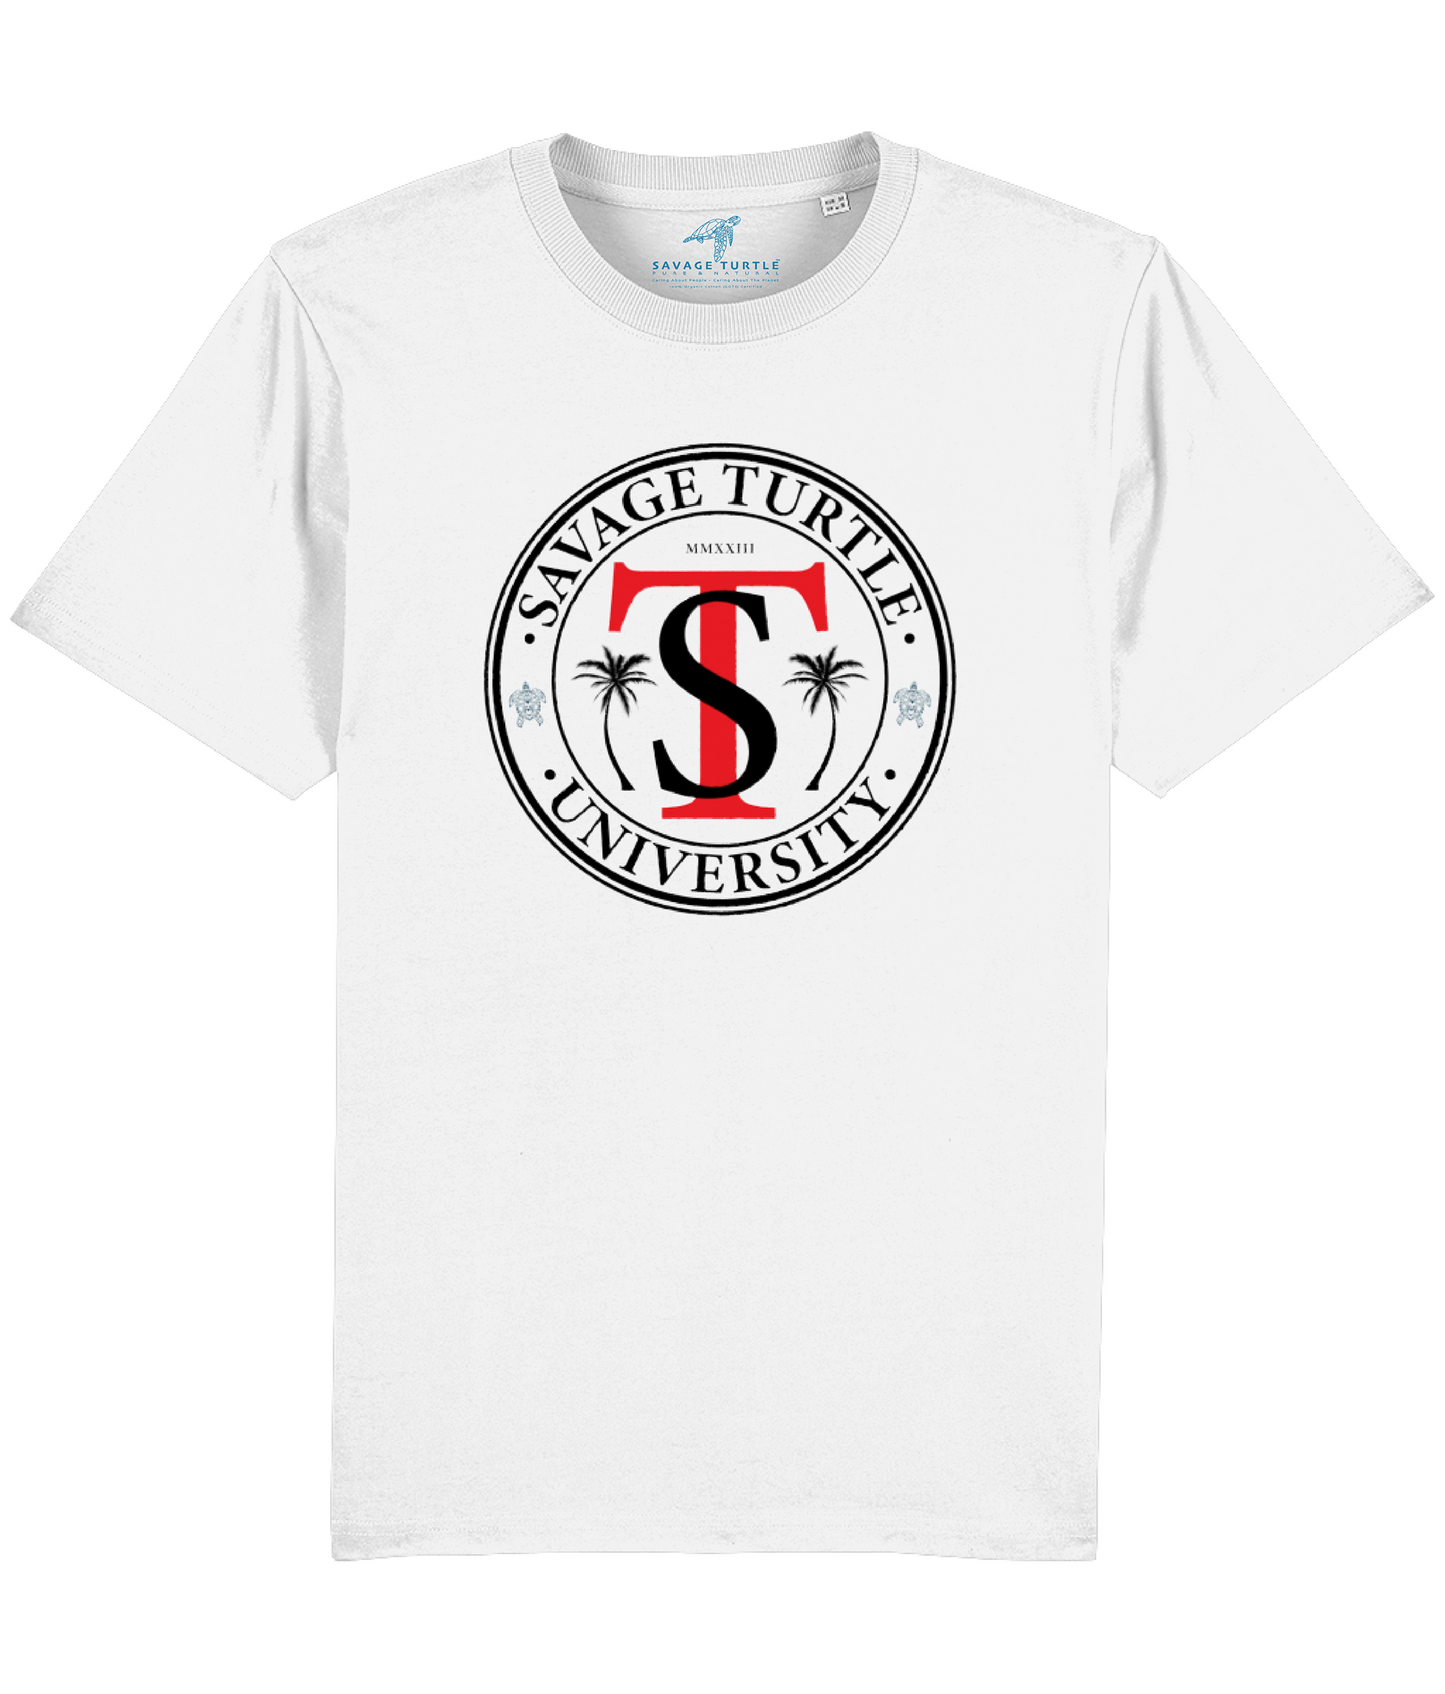 T-shirt White Savage Turtle University